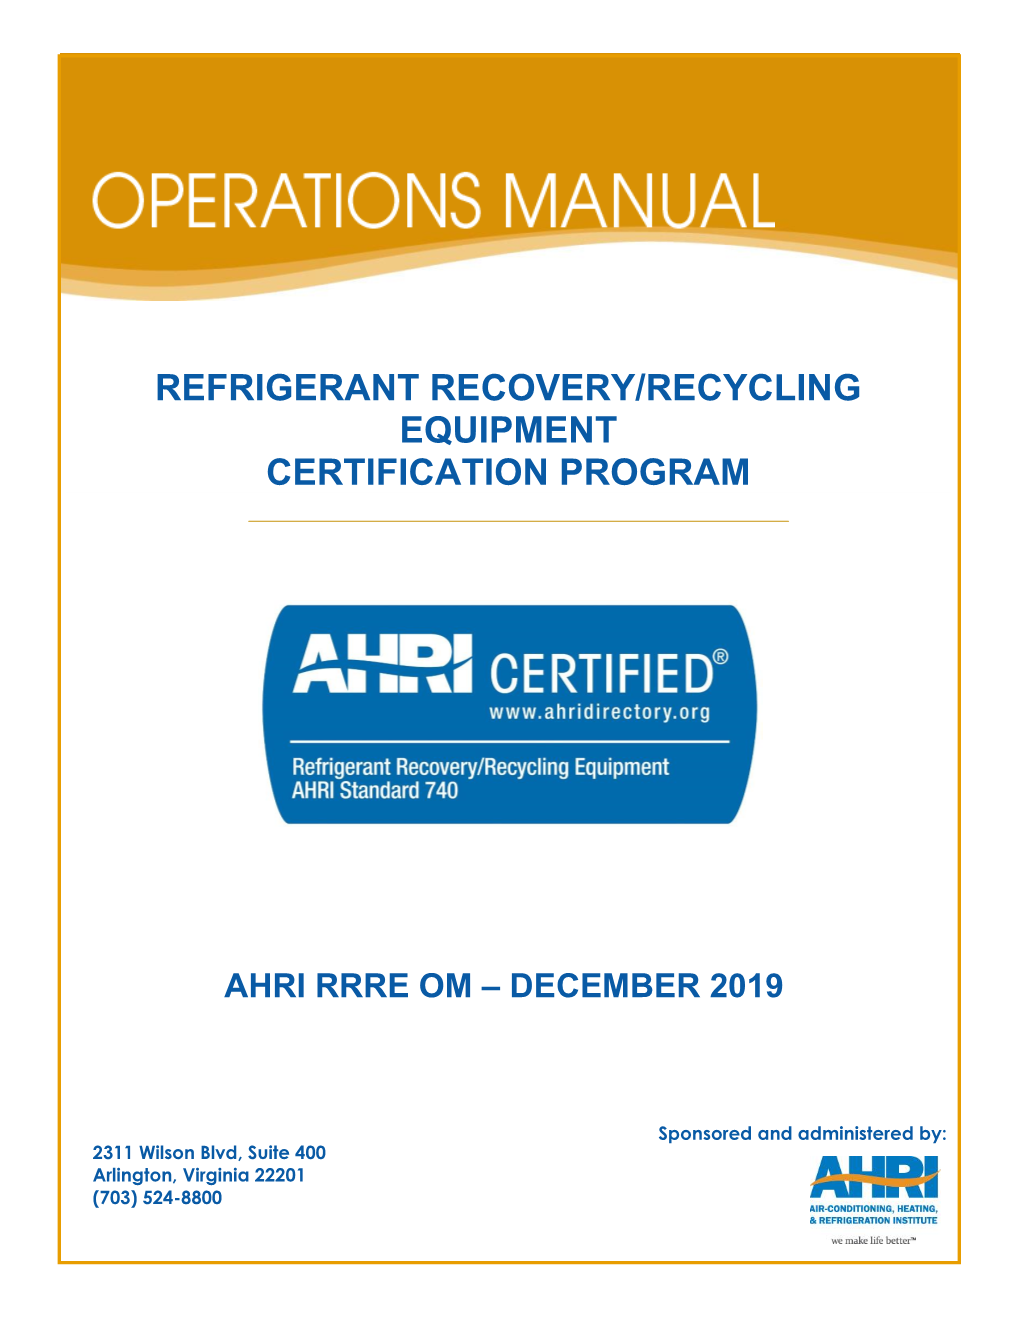 Refrigerant Recovery/Recycling Equipment Certification Program